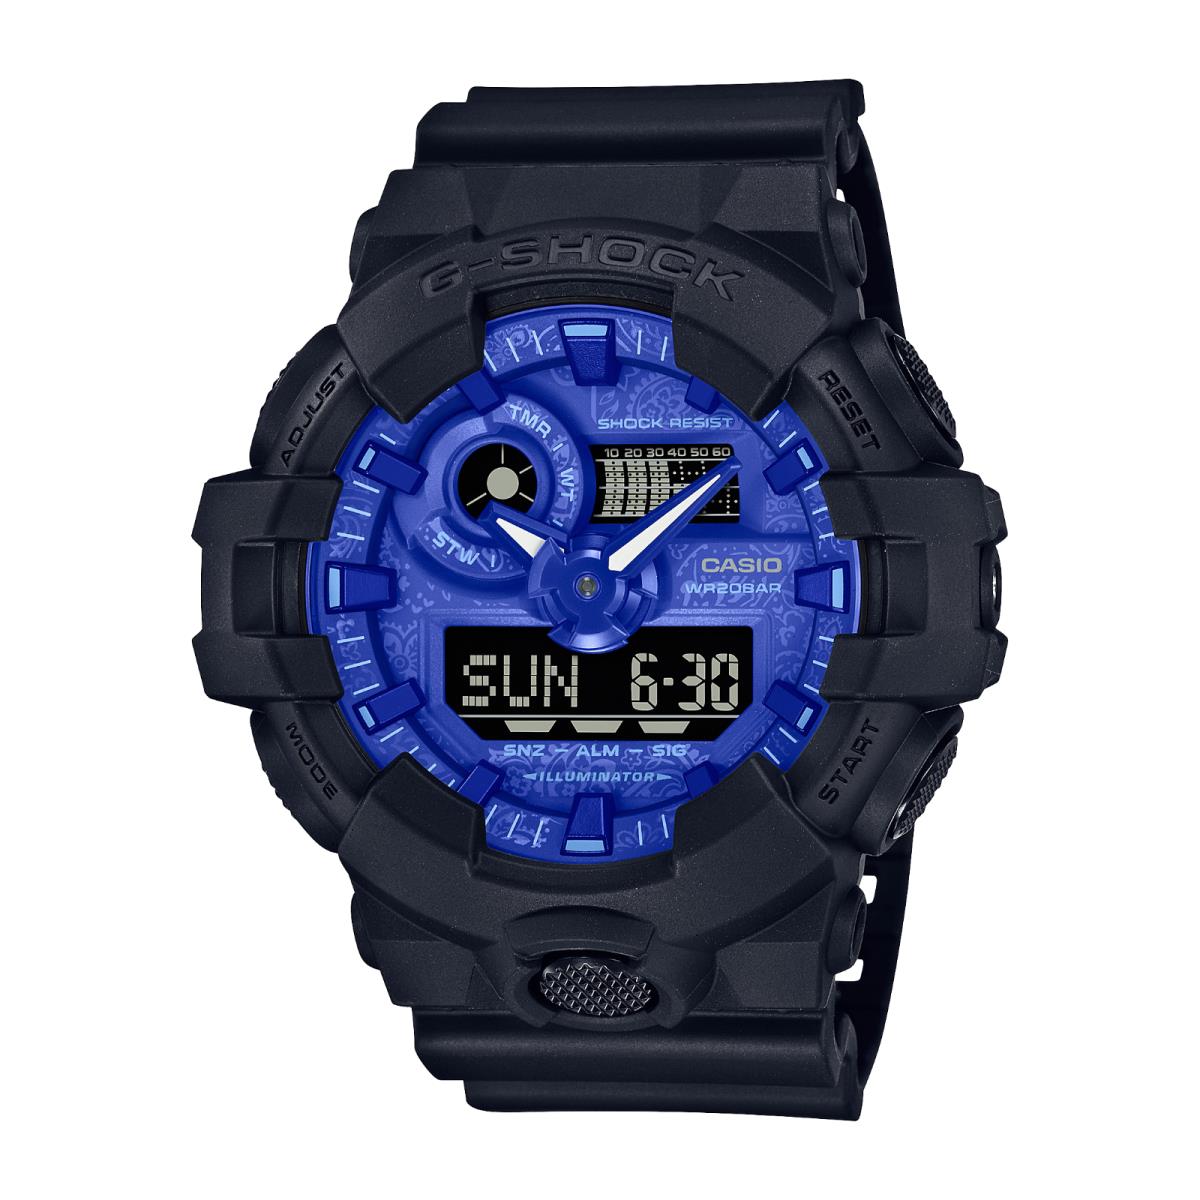 Casio G-shock GA700BP-1 Ana-digital Blue Paisley Series Resin Strap Watch